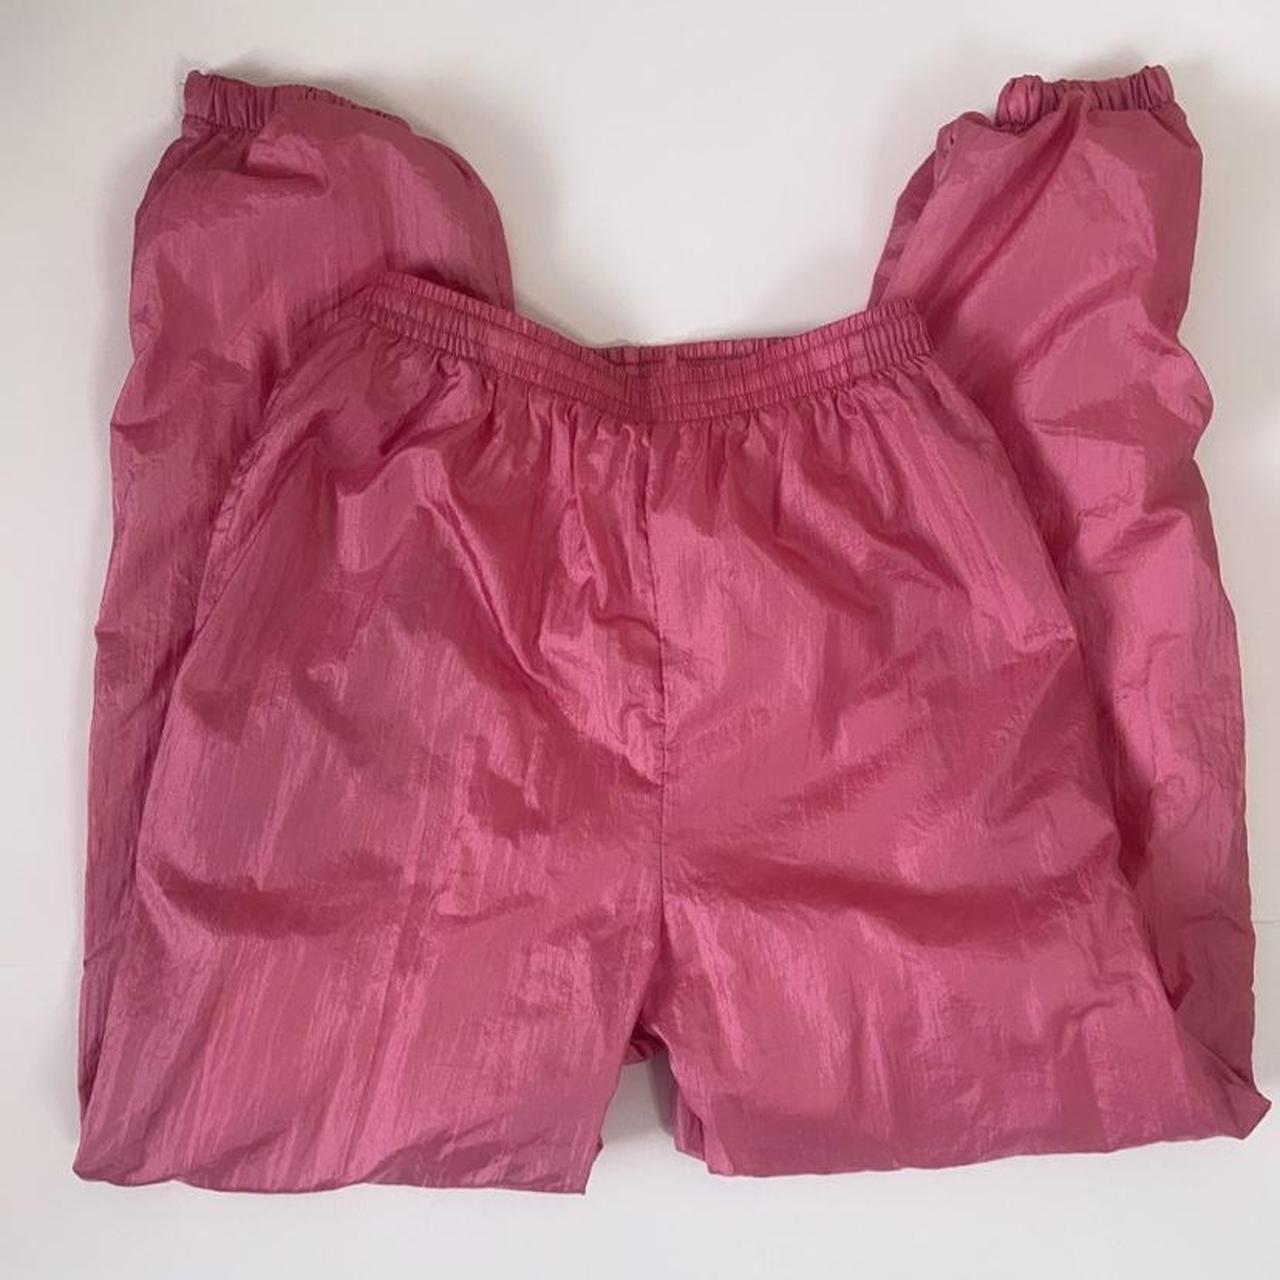 EB Sport Women's Pink Trousers (2)